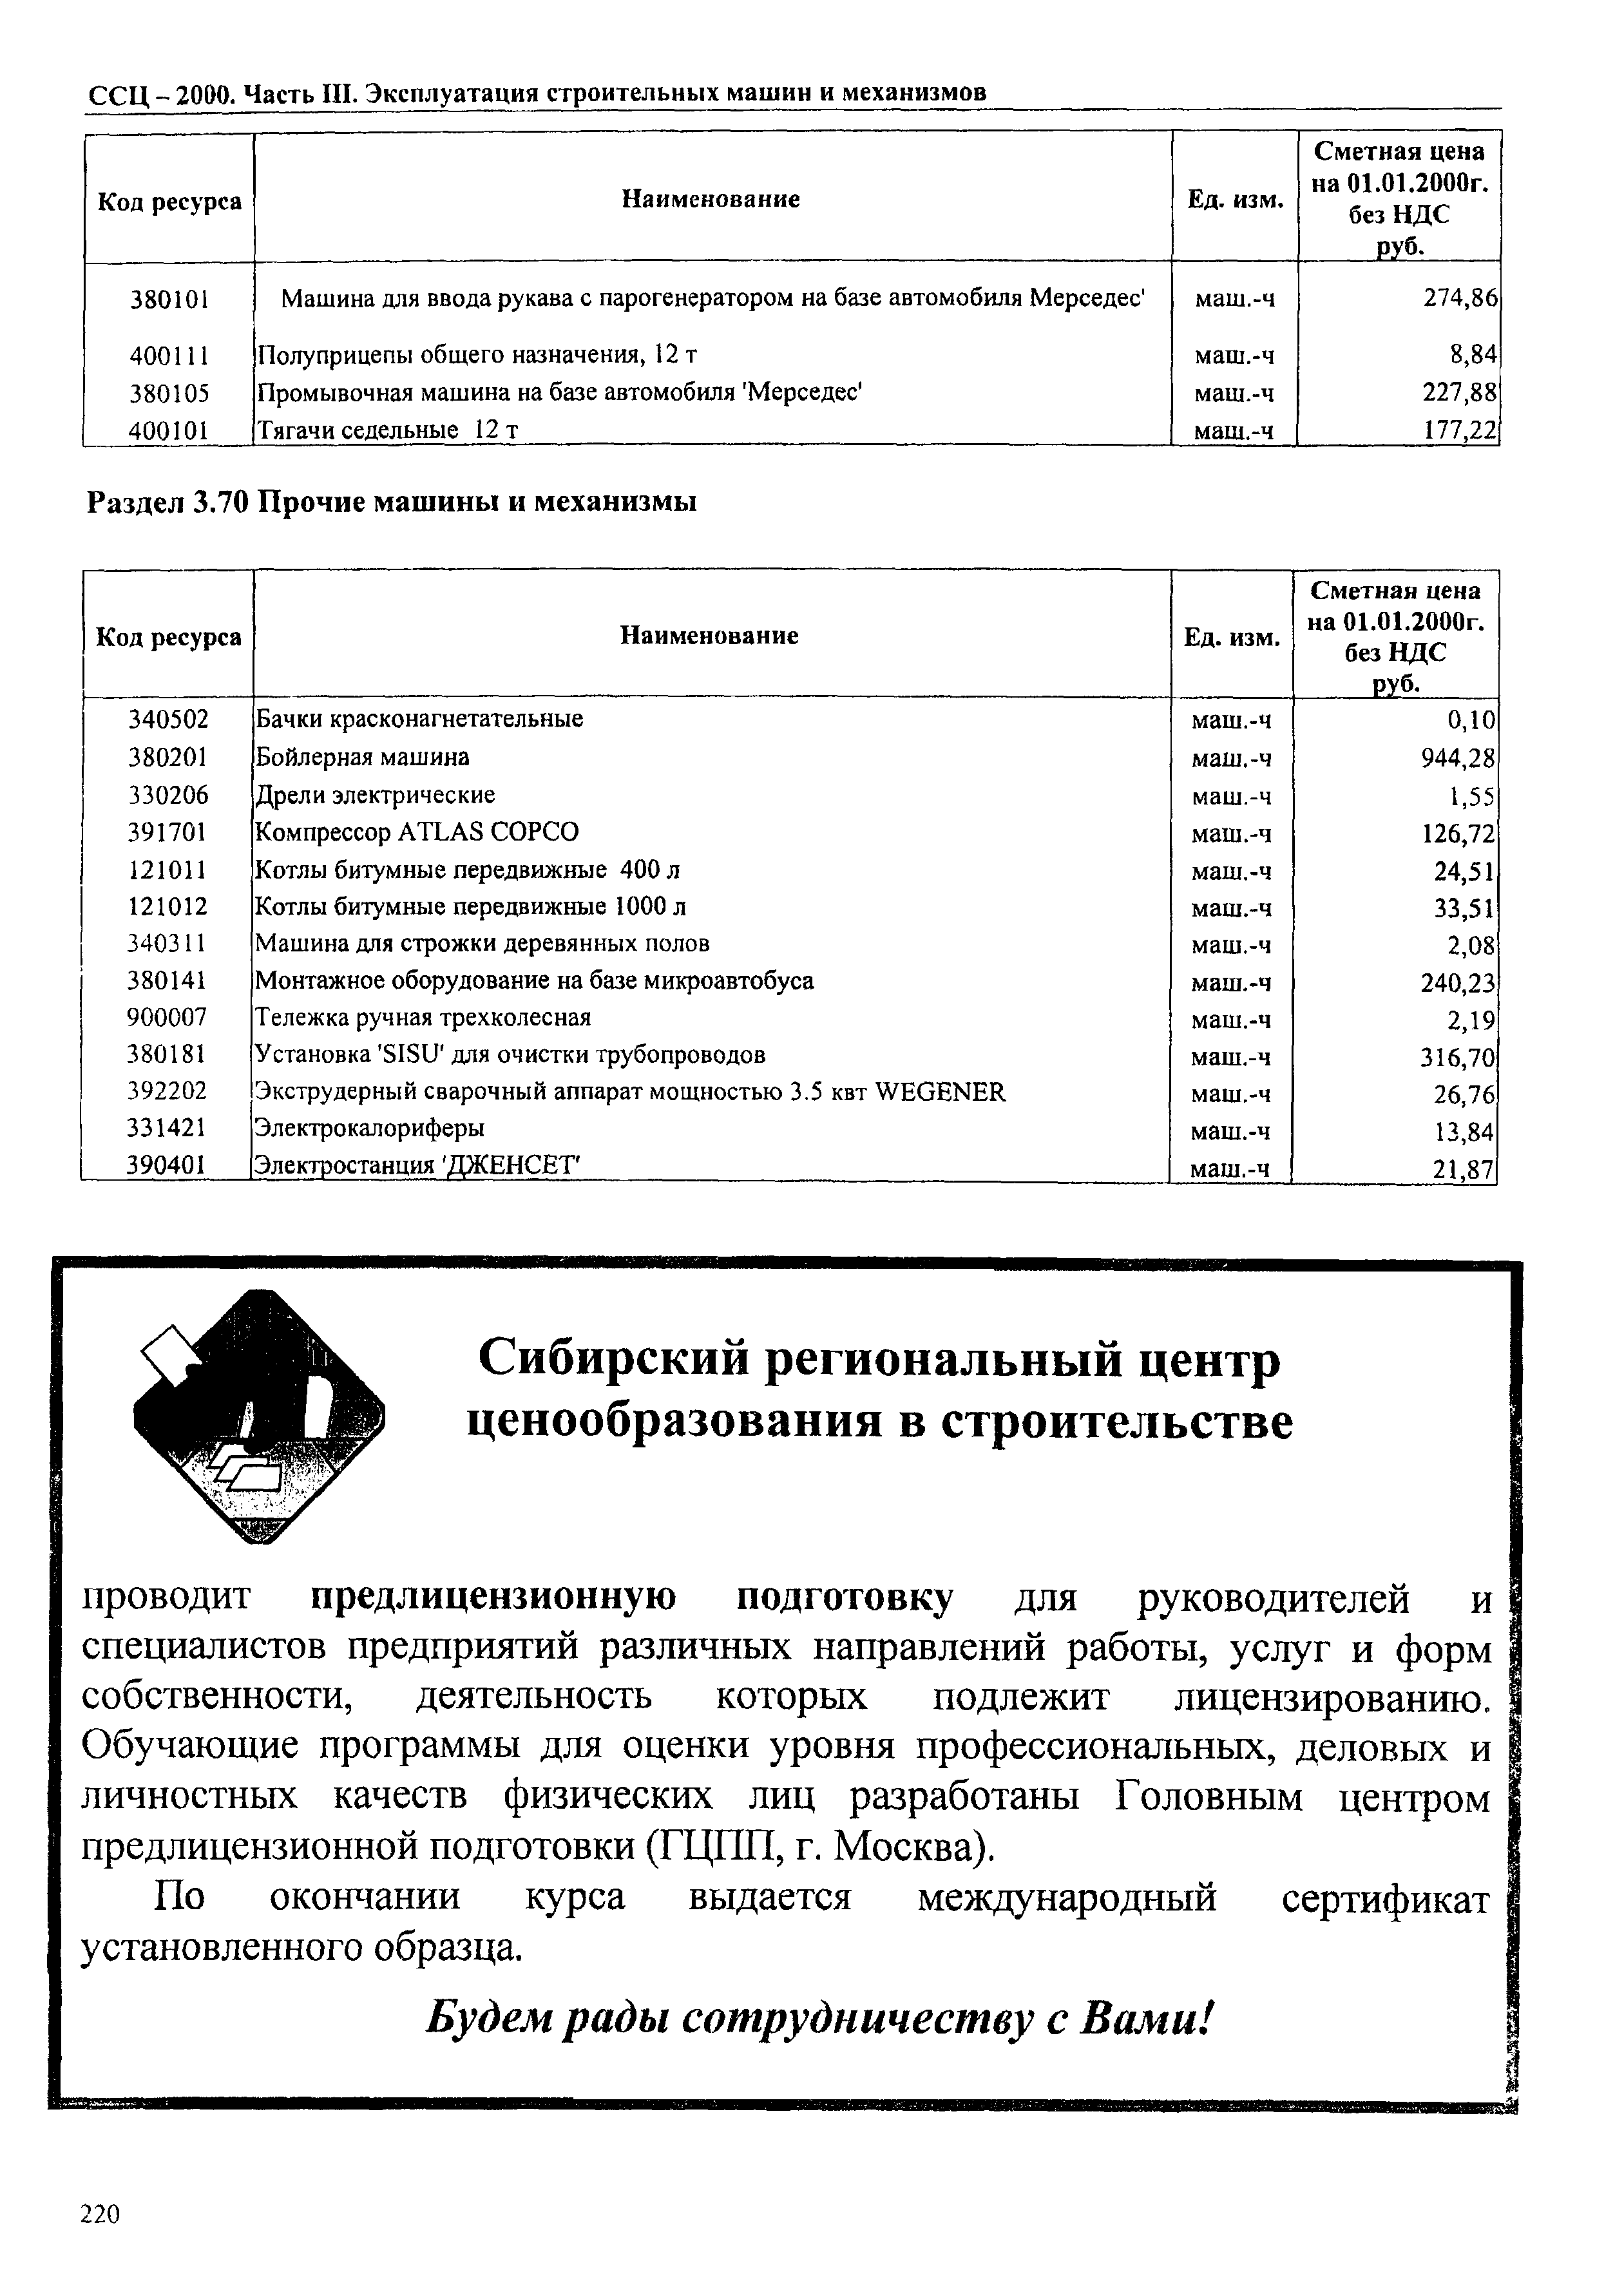 ТЕРр Омской области 2000